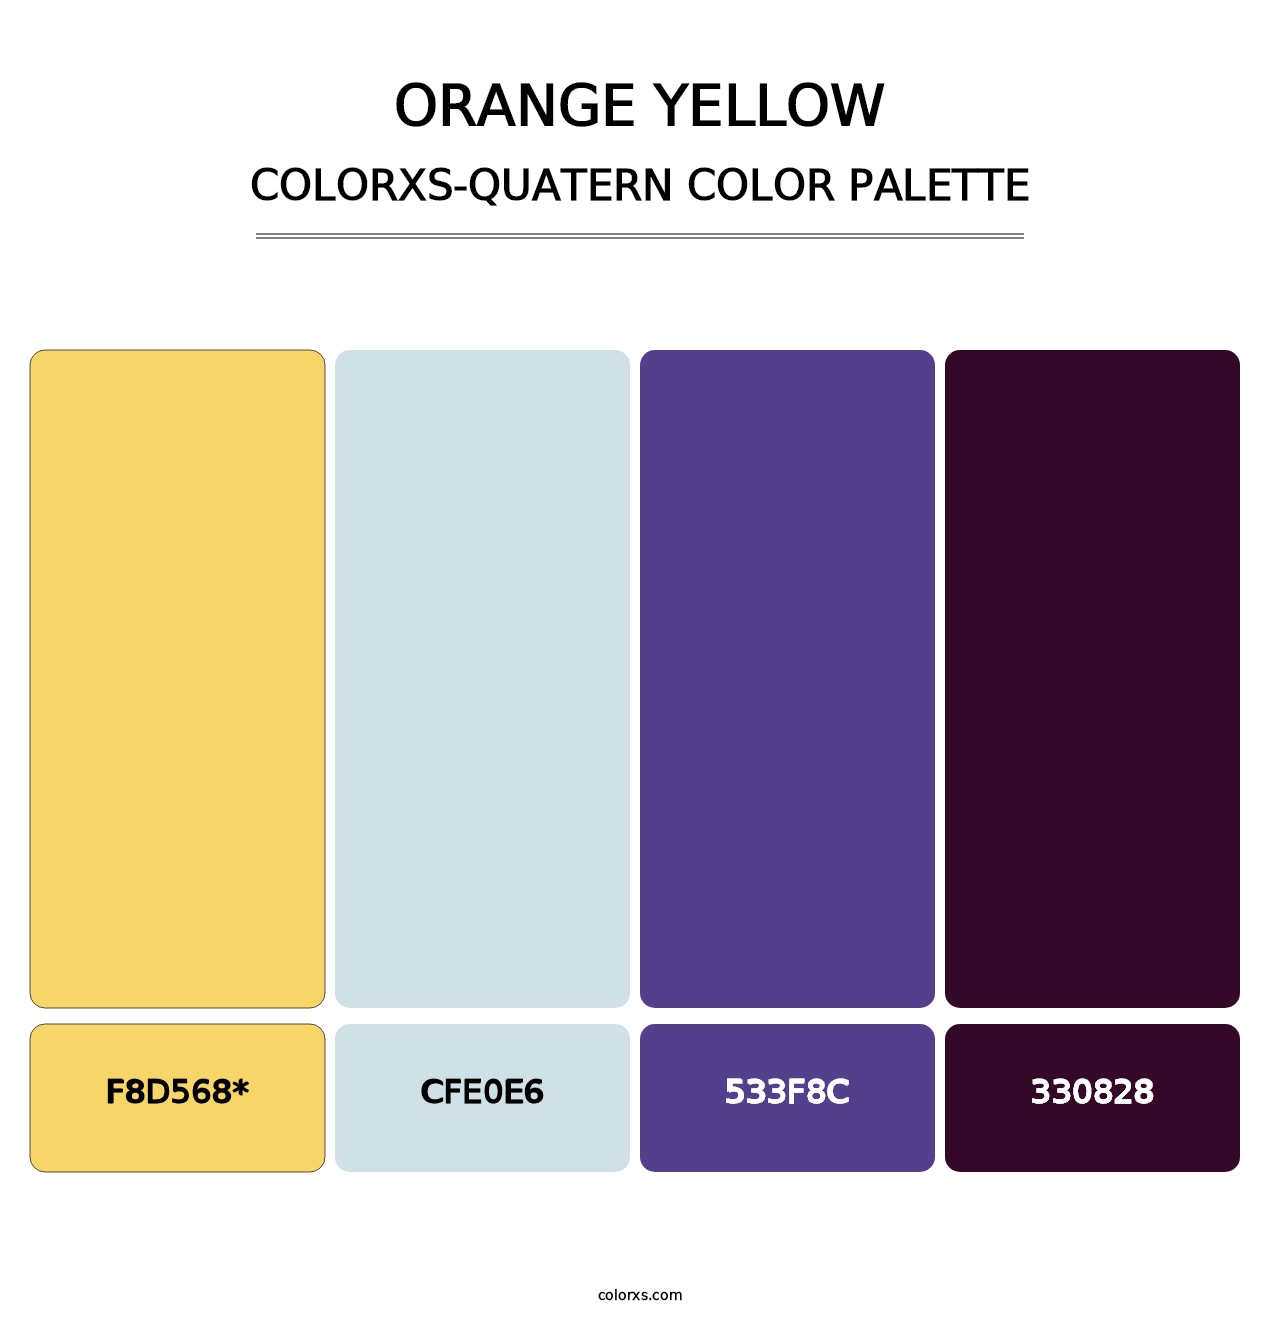 Orange Yellow - Colorxs Quatern Palette